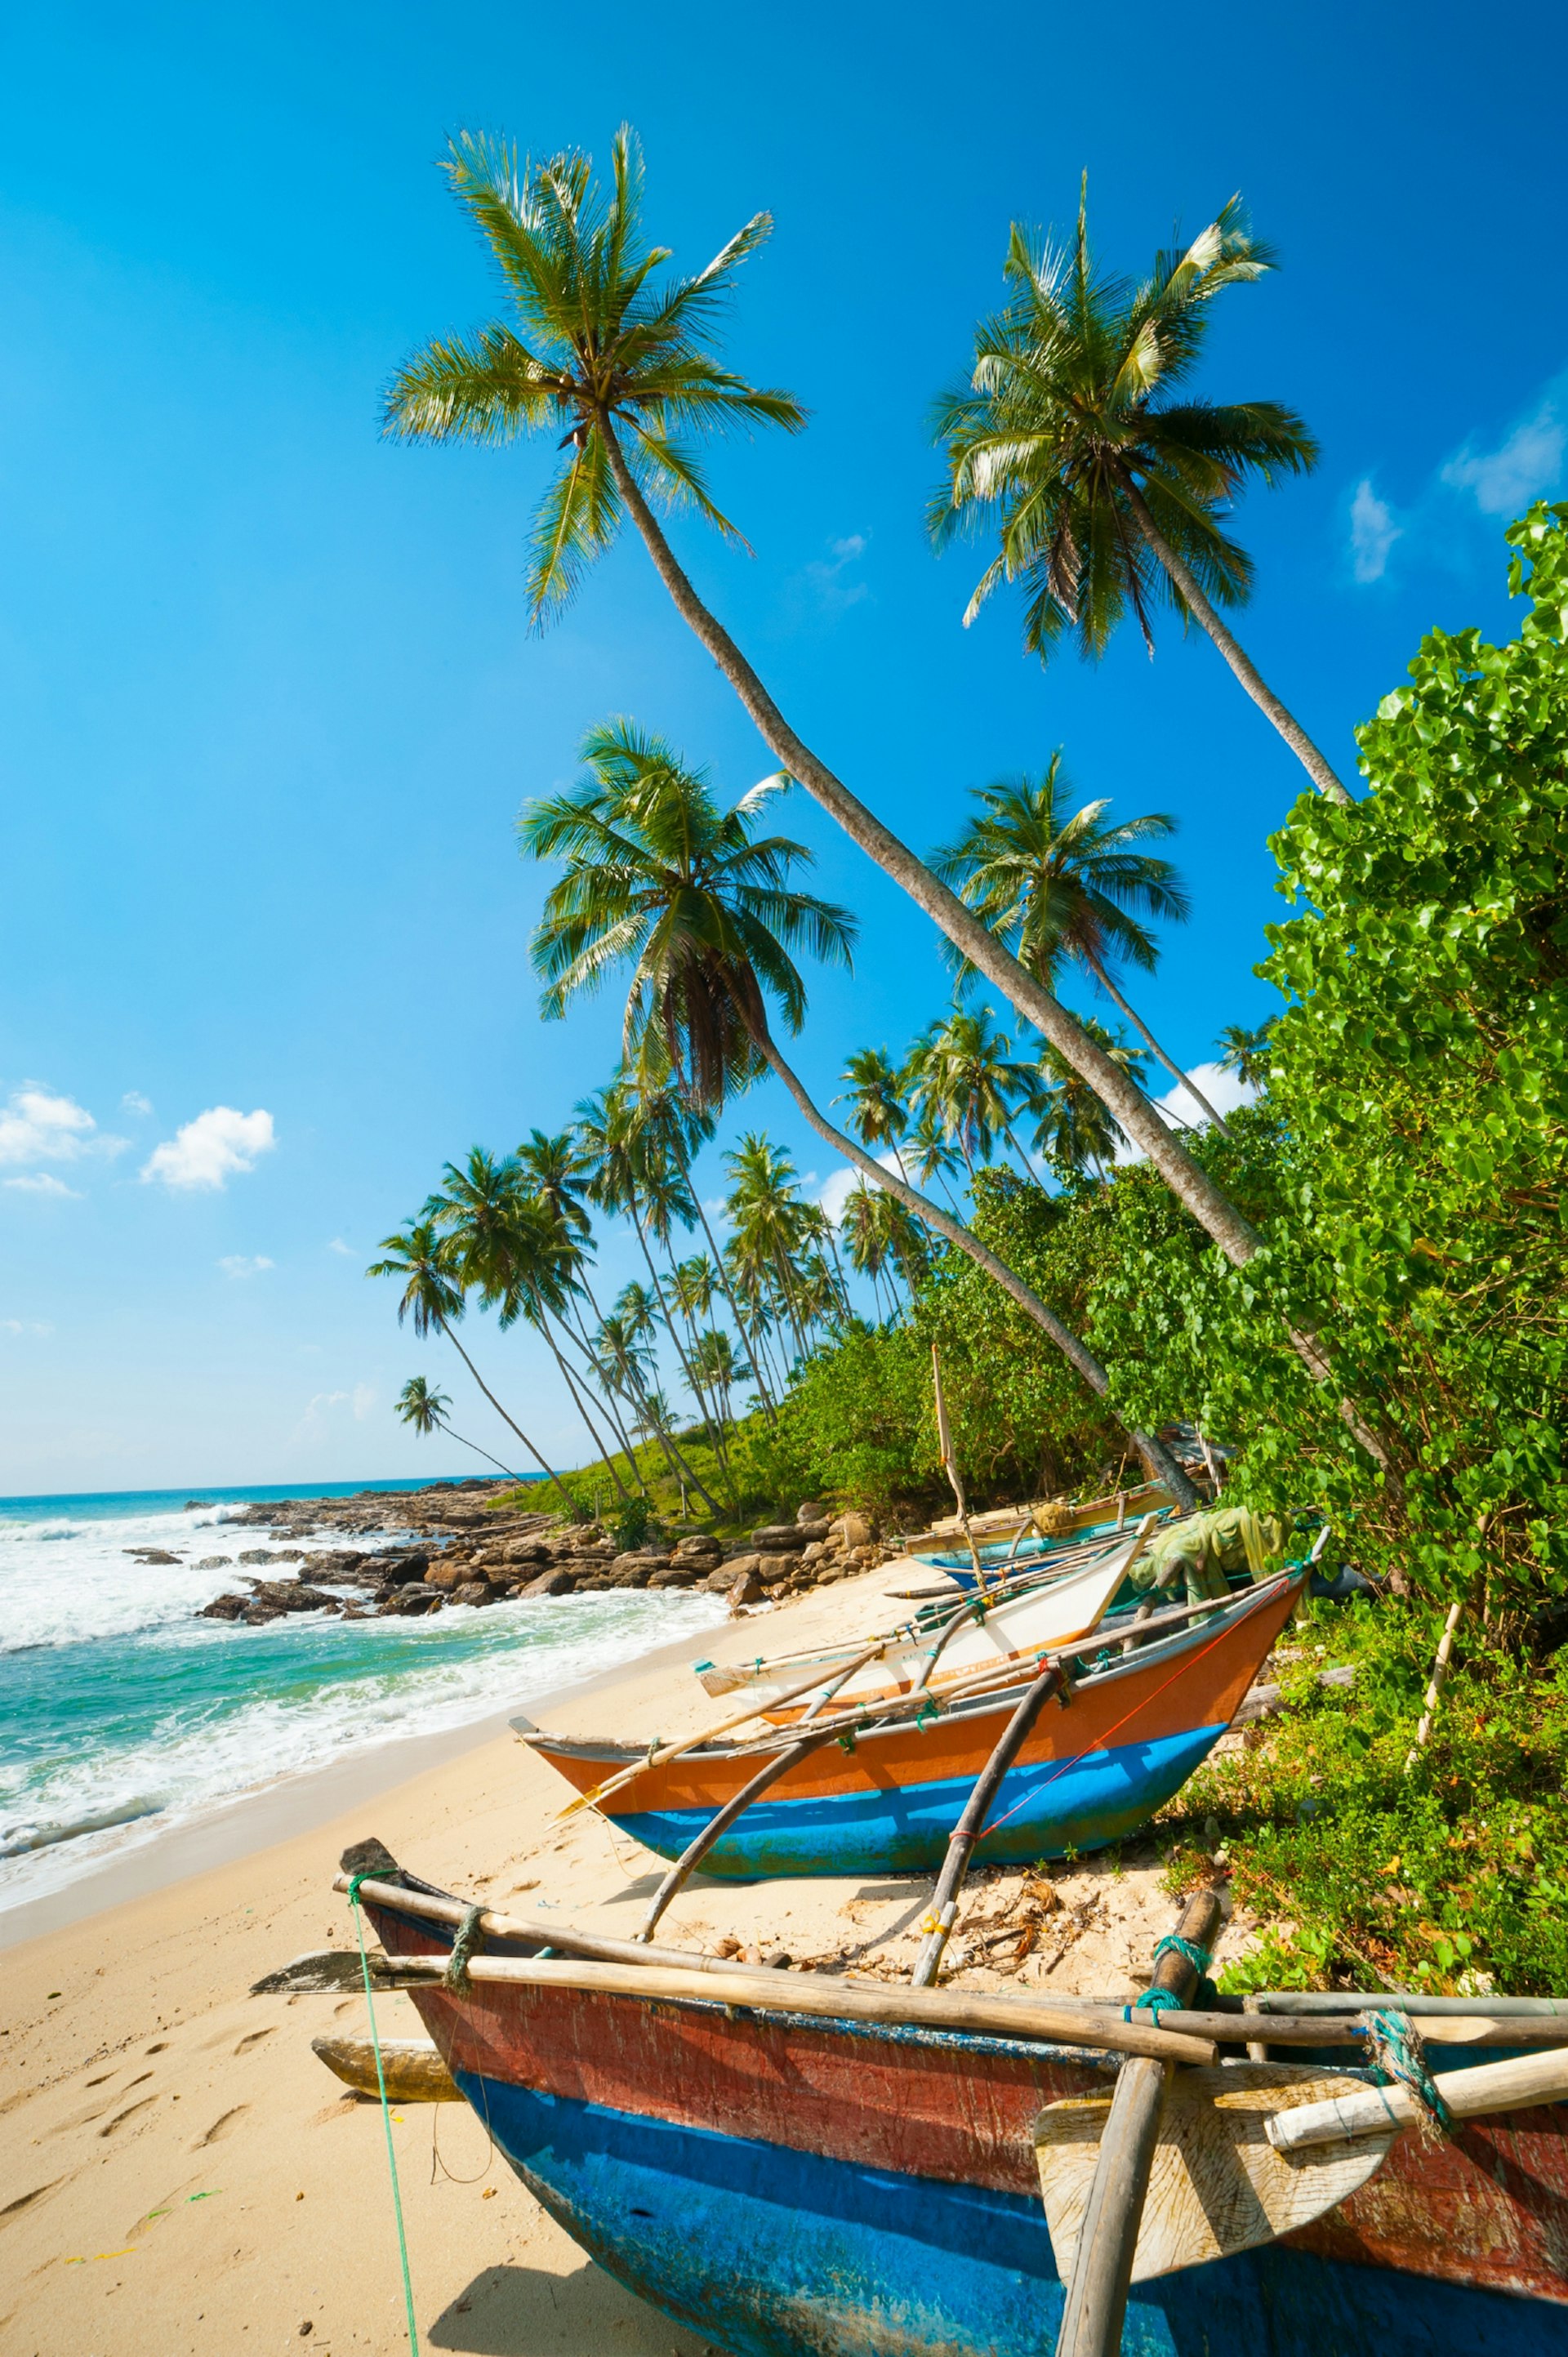 Fishing boats on a tropical beach in Sri Lanka © Anton Gvozdikov / Shutterstock